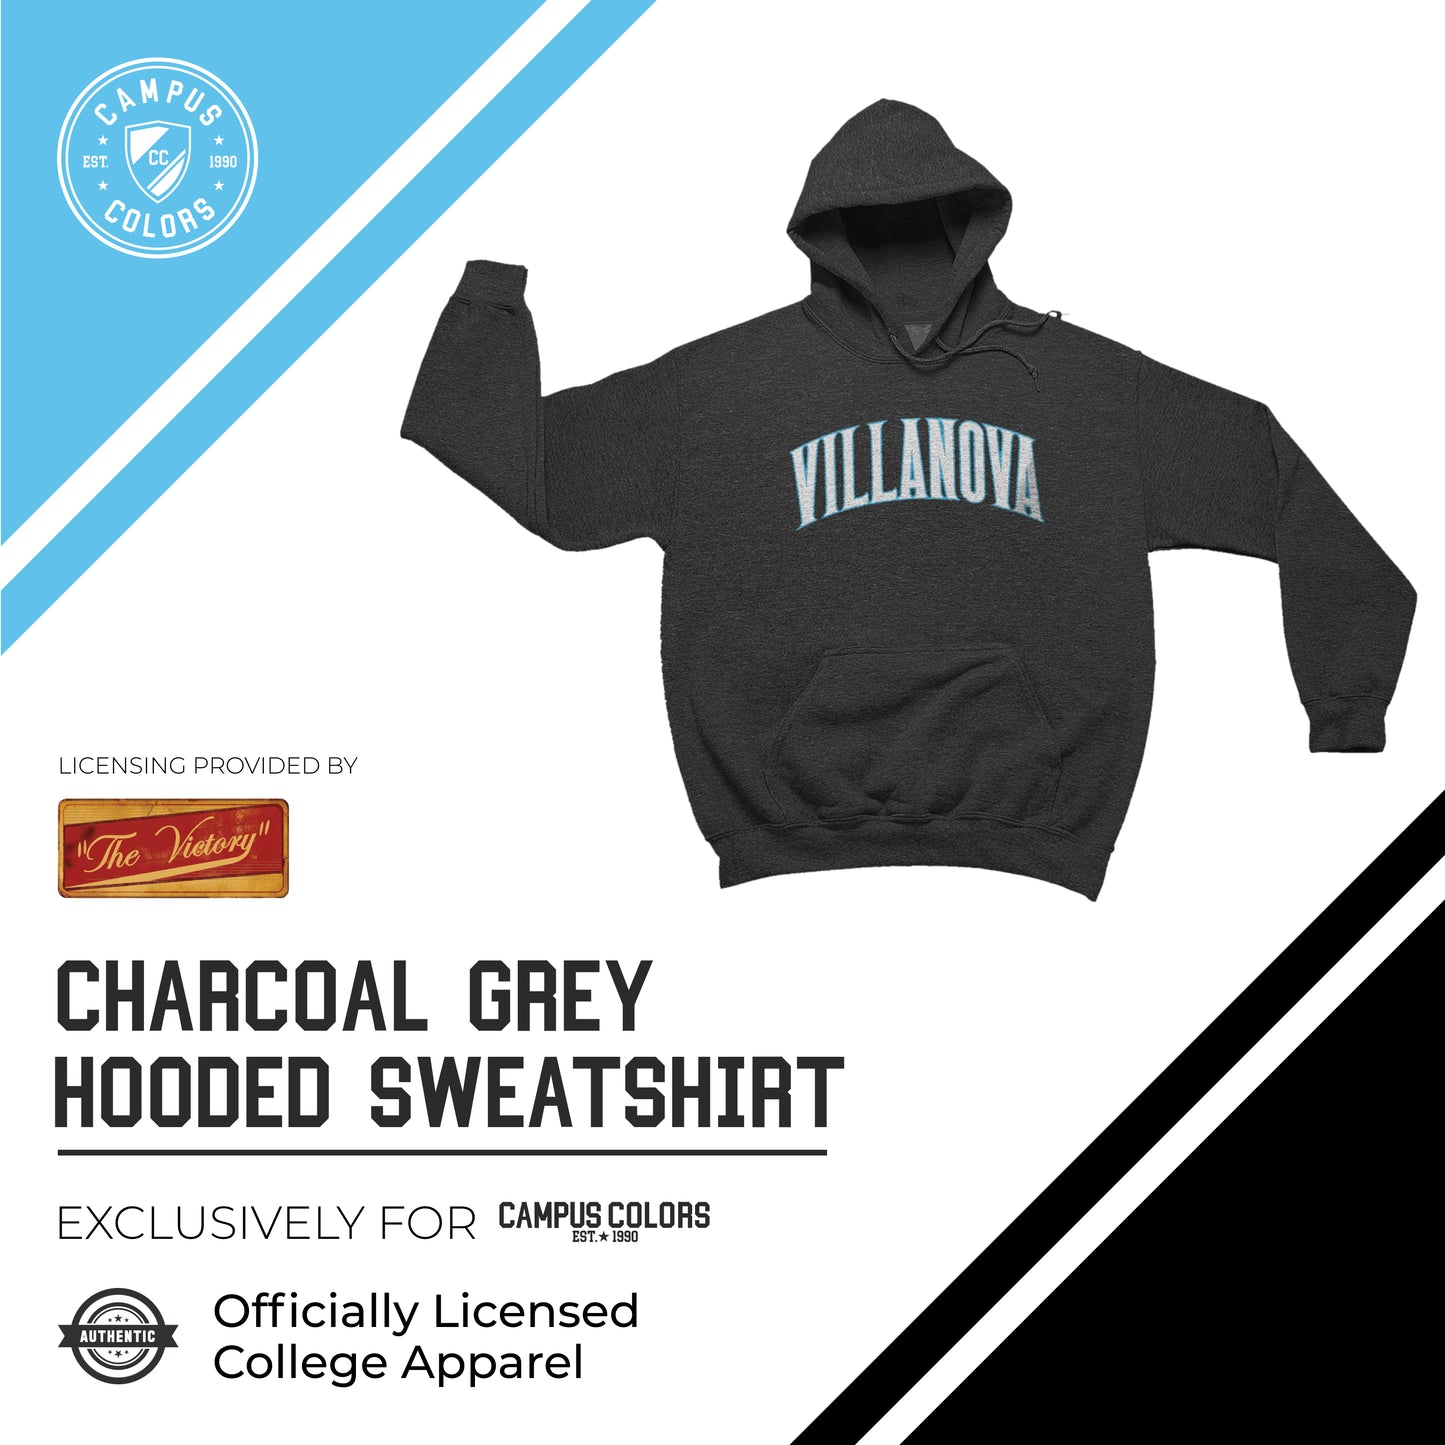 Villanova Wildcats NCAA Adult Cotton Blend Charcoal Hooded Sweatshirt - Charcoal